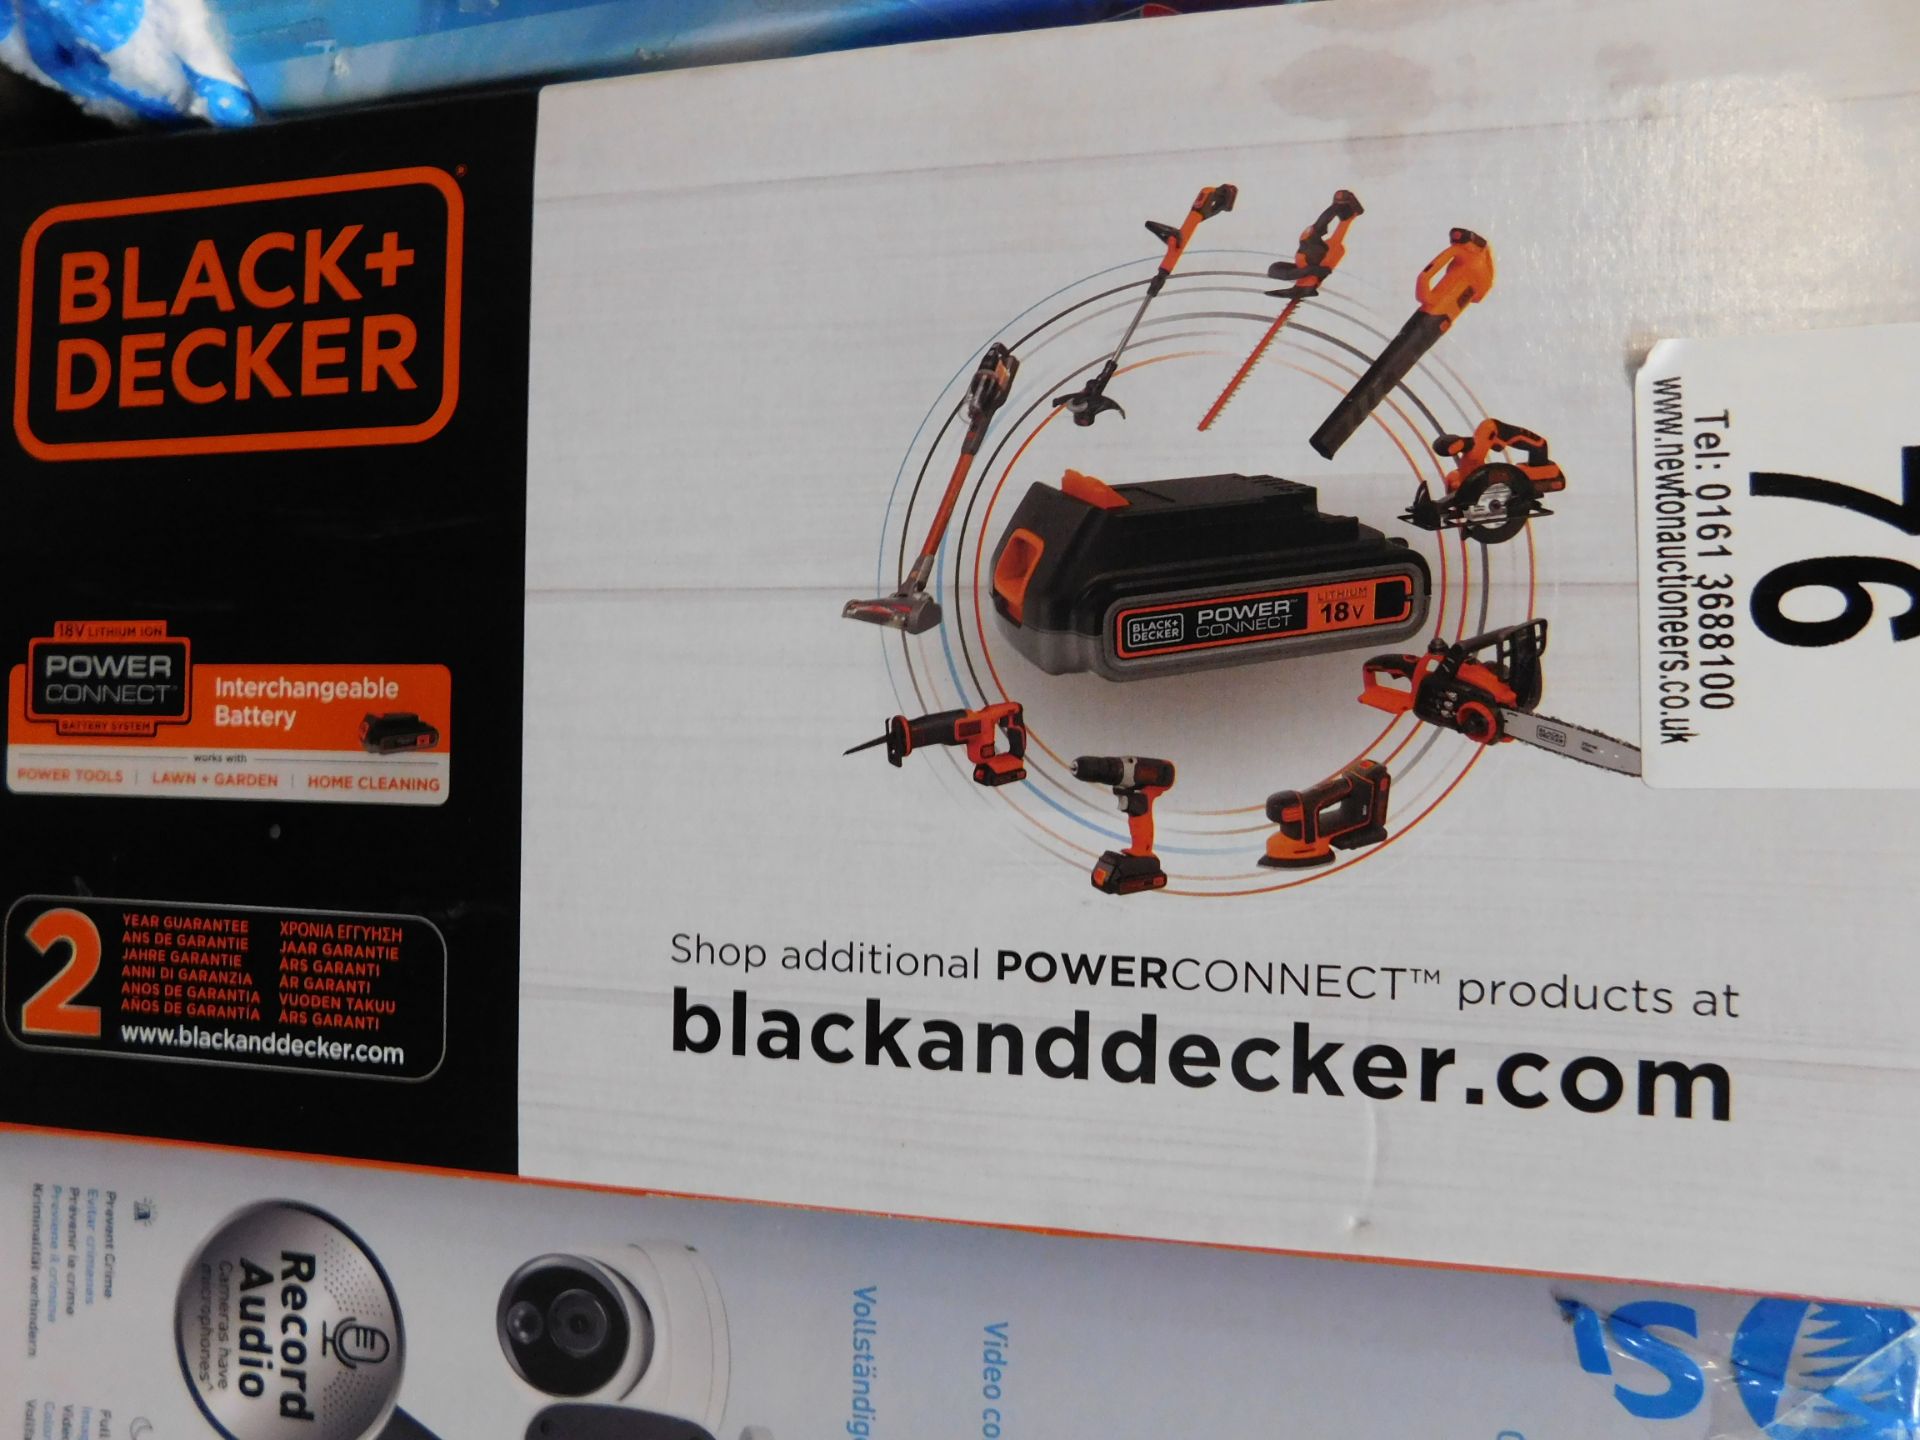 1 BOXED BLACK AND DECKER 18V 2AH 24 BAR LI-ION CORDLESS PRESSURE WASHER / POWER CLEANER RRP Â£129.